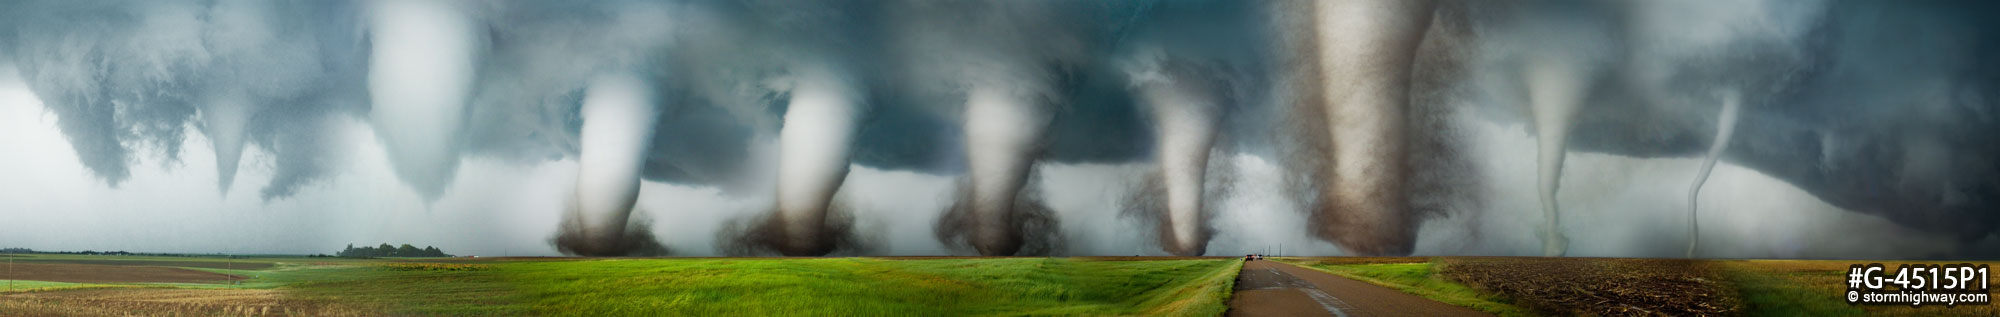 Tornado life cycle panorama 2